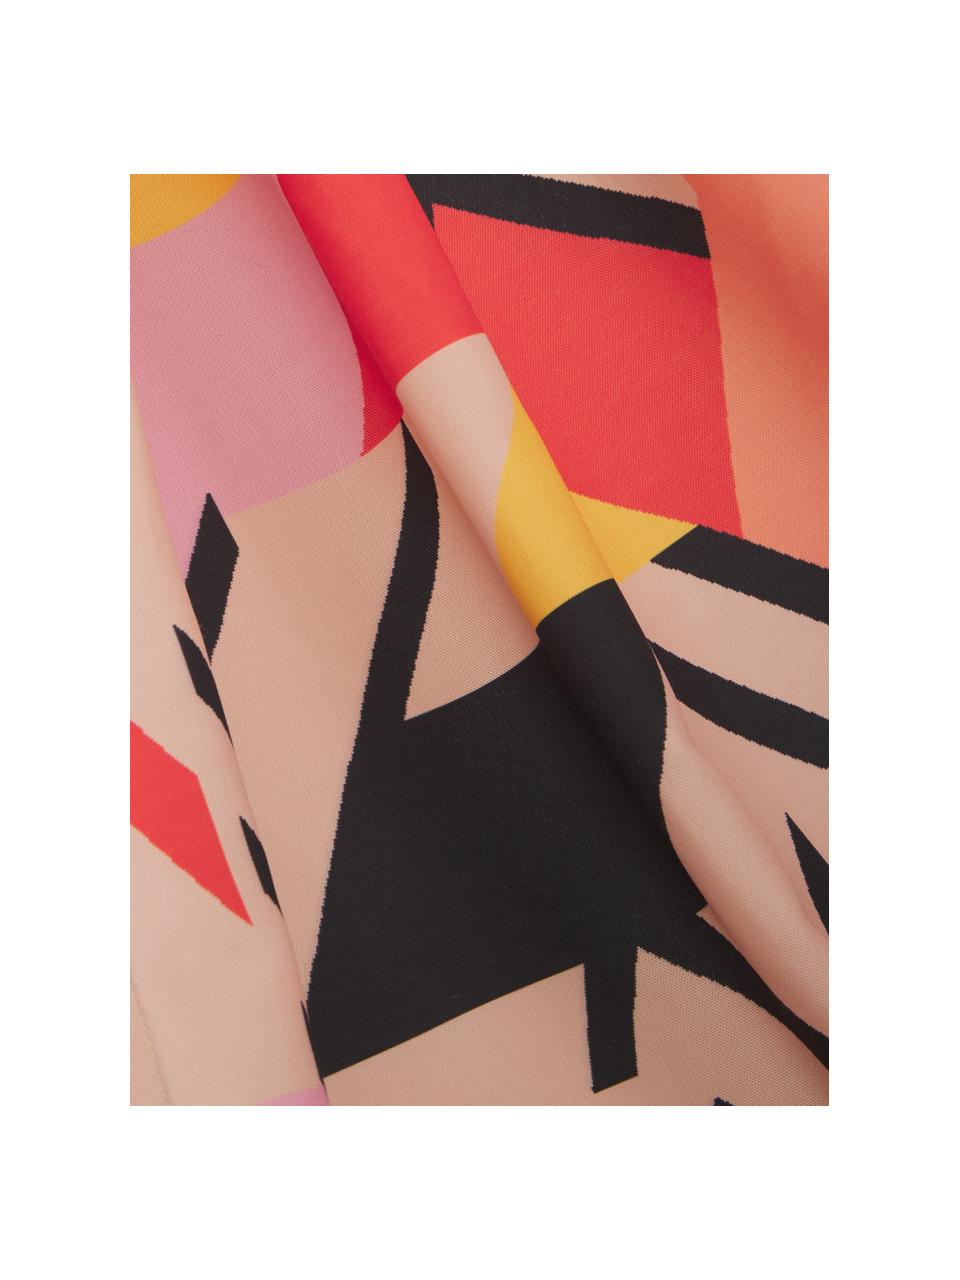 Hangmat Arti met gekleurd patroon, Polyester, Roze, oranje, rood, zwart, B 80 x L 180 cm